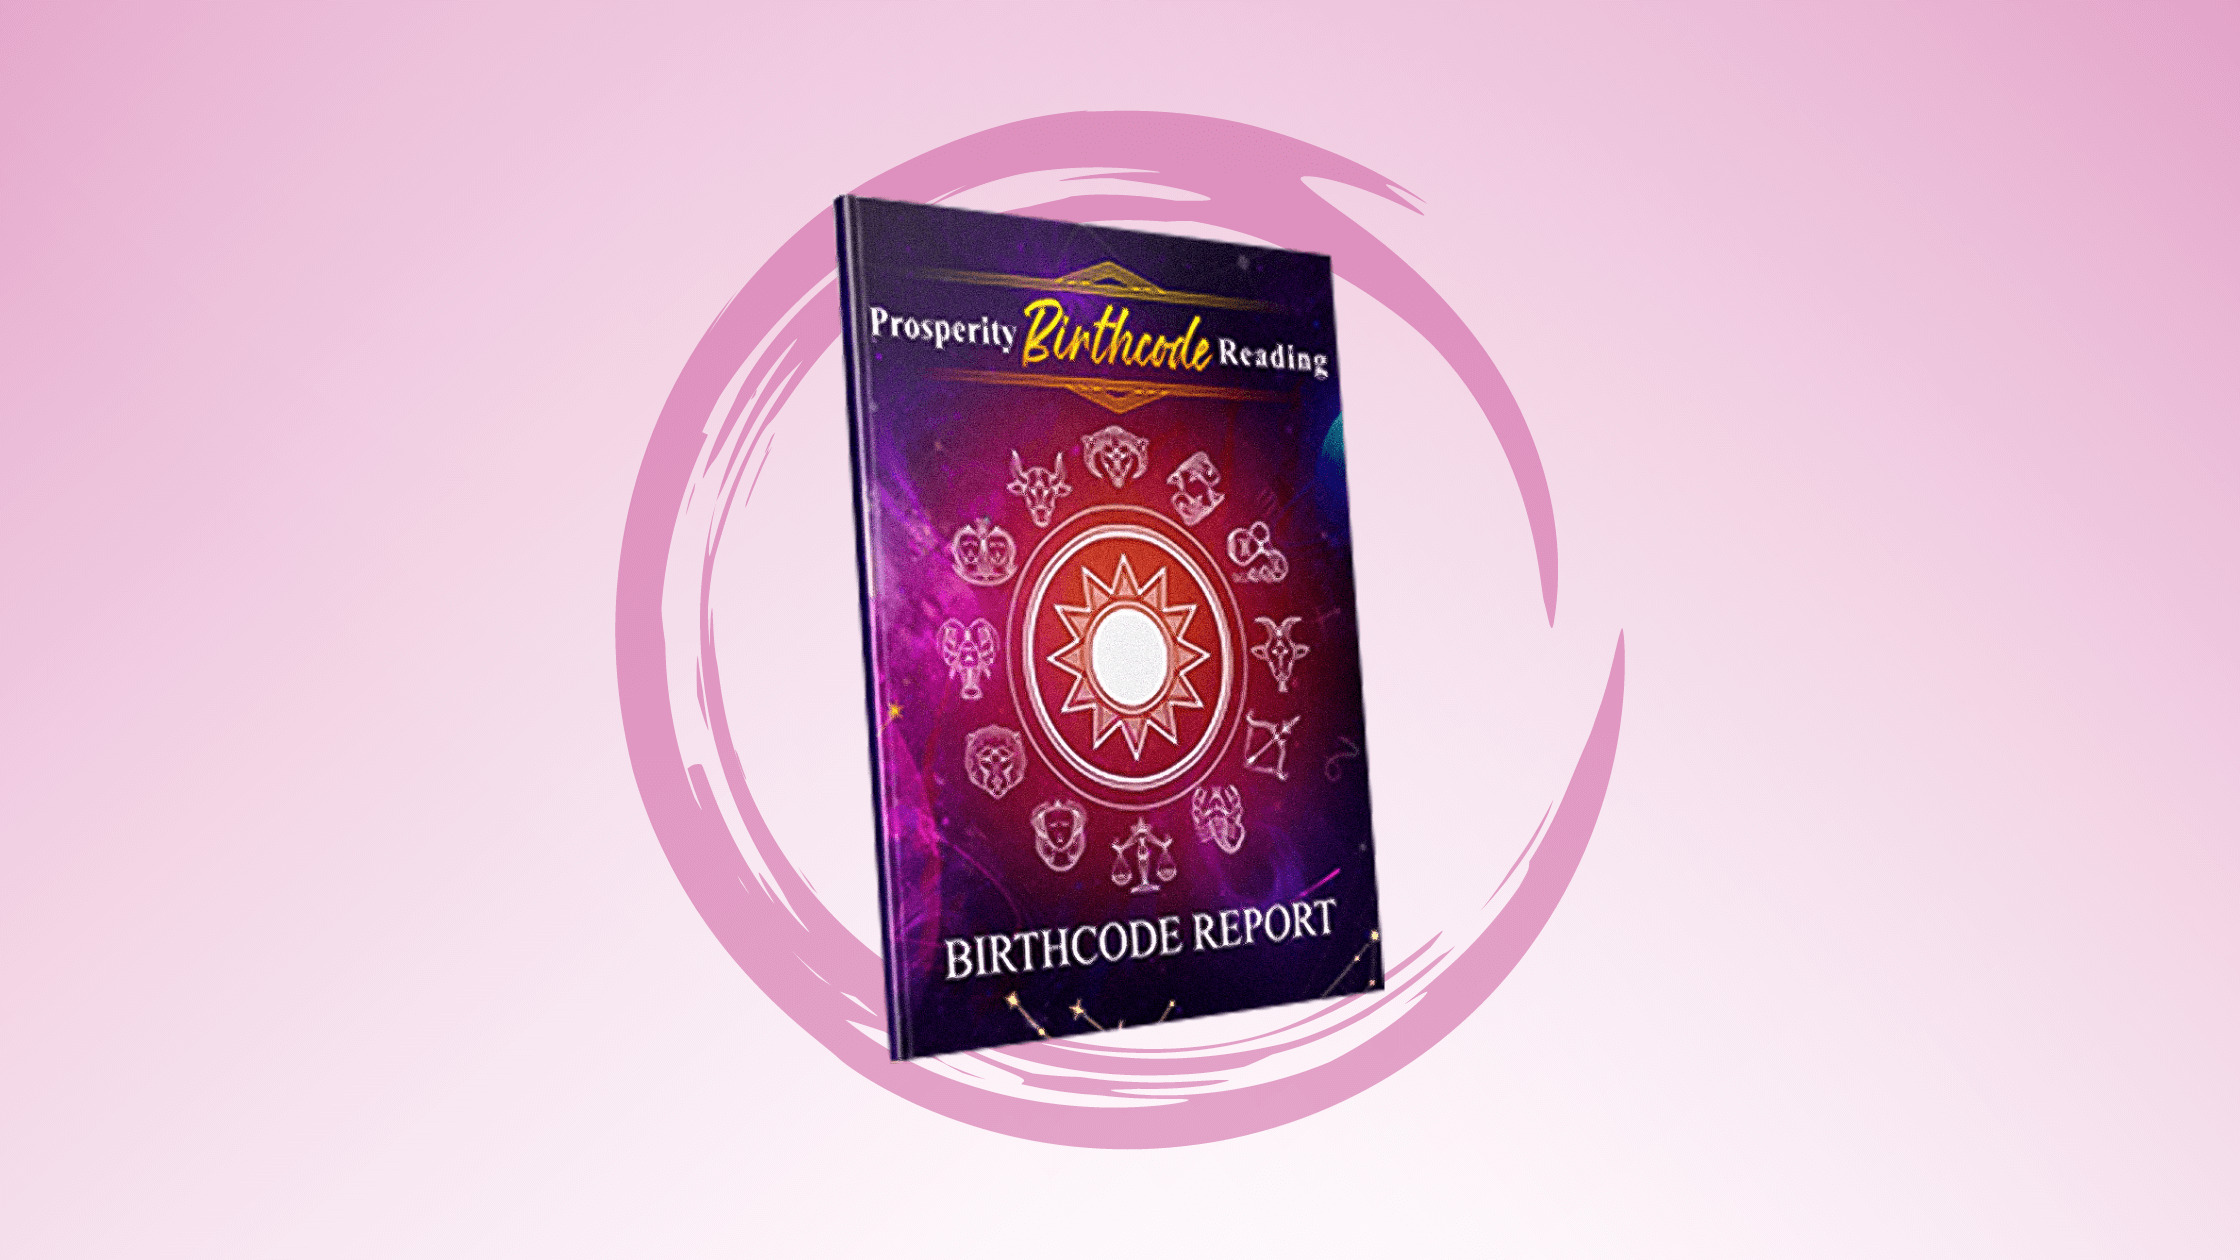 Prosperity Birthcode Reading reviews